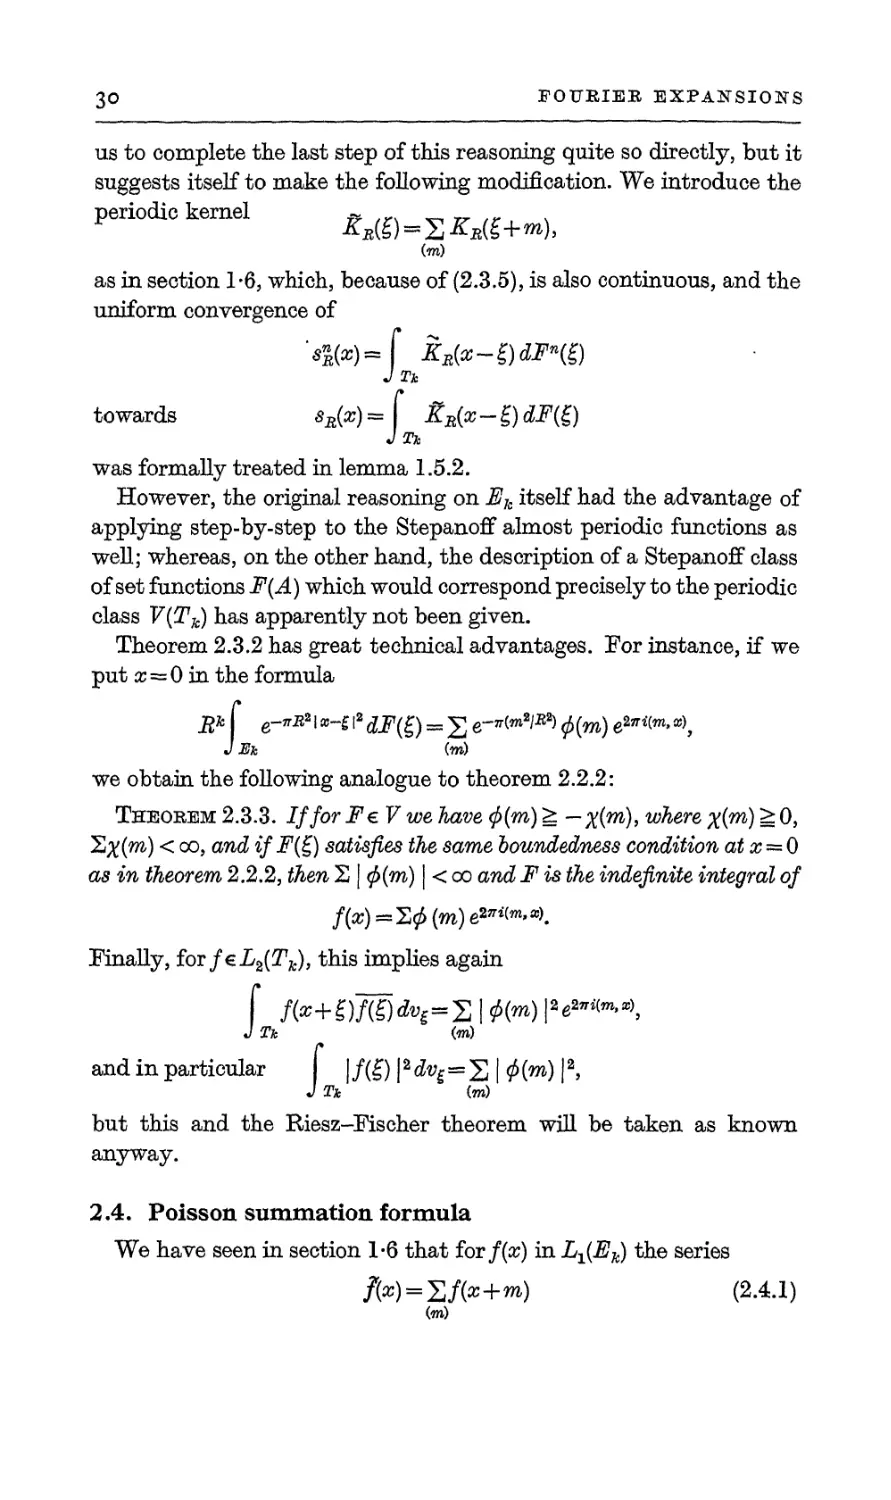 2.4. Poisson summation formula